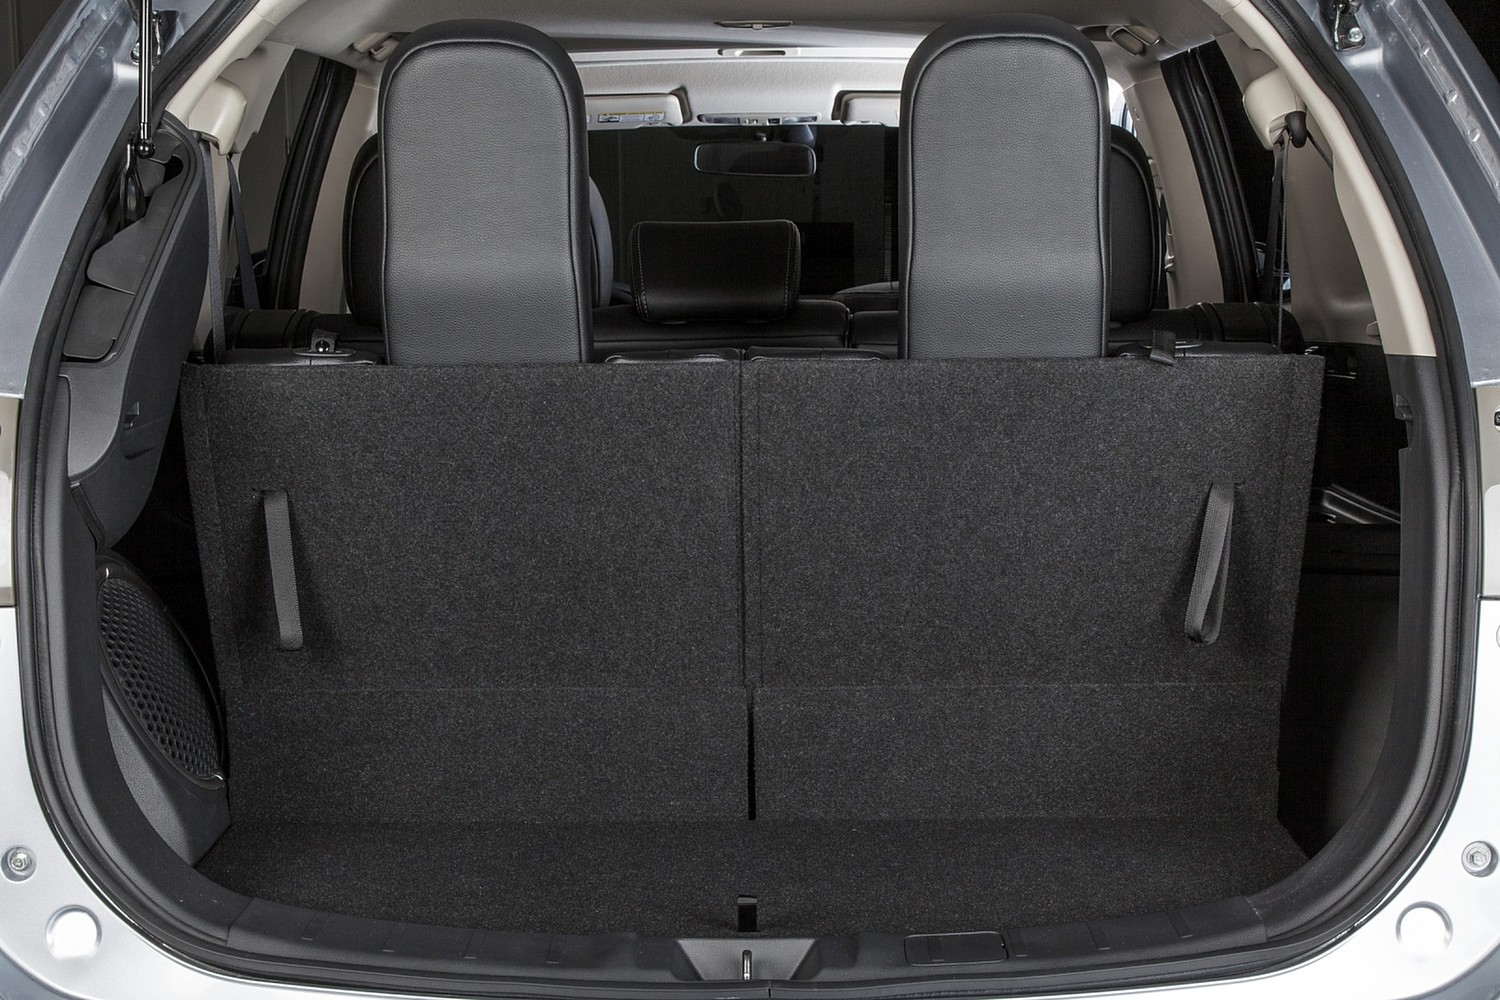 Mitsubishi Outlander GT 4dr SUV Interior Detail (2014 model year shown)